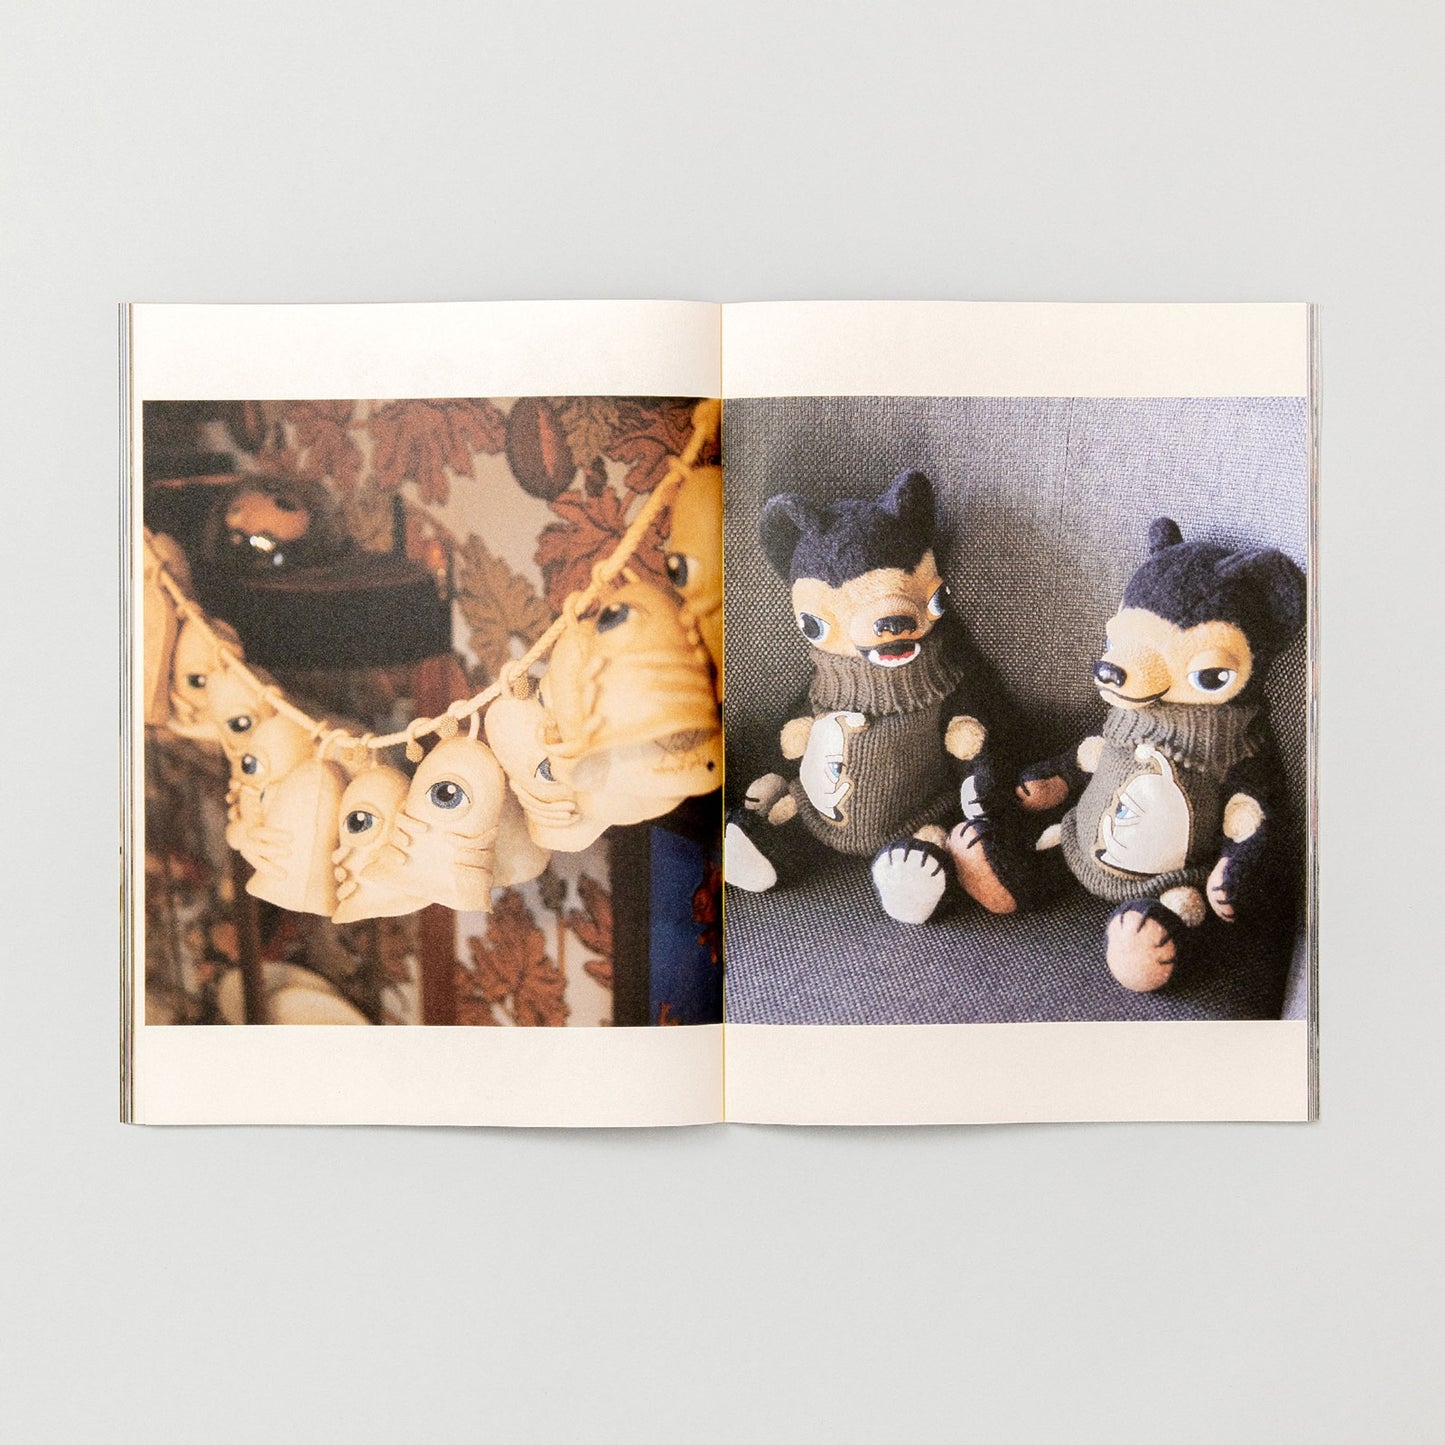 [New Artbook] Teddy Bear Works Imai Masayo